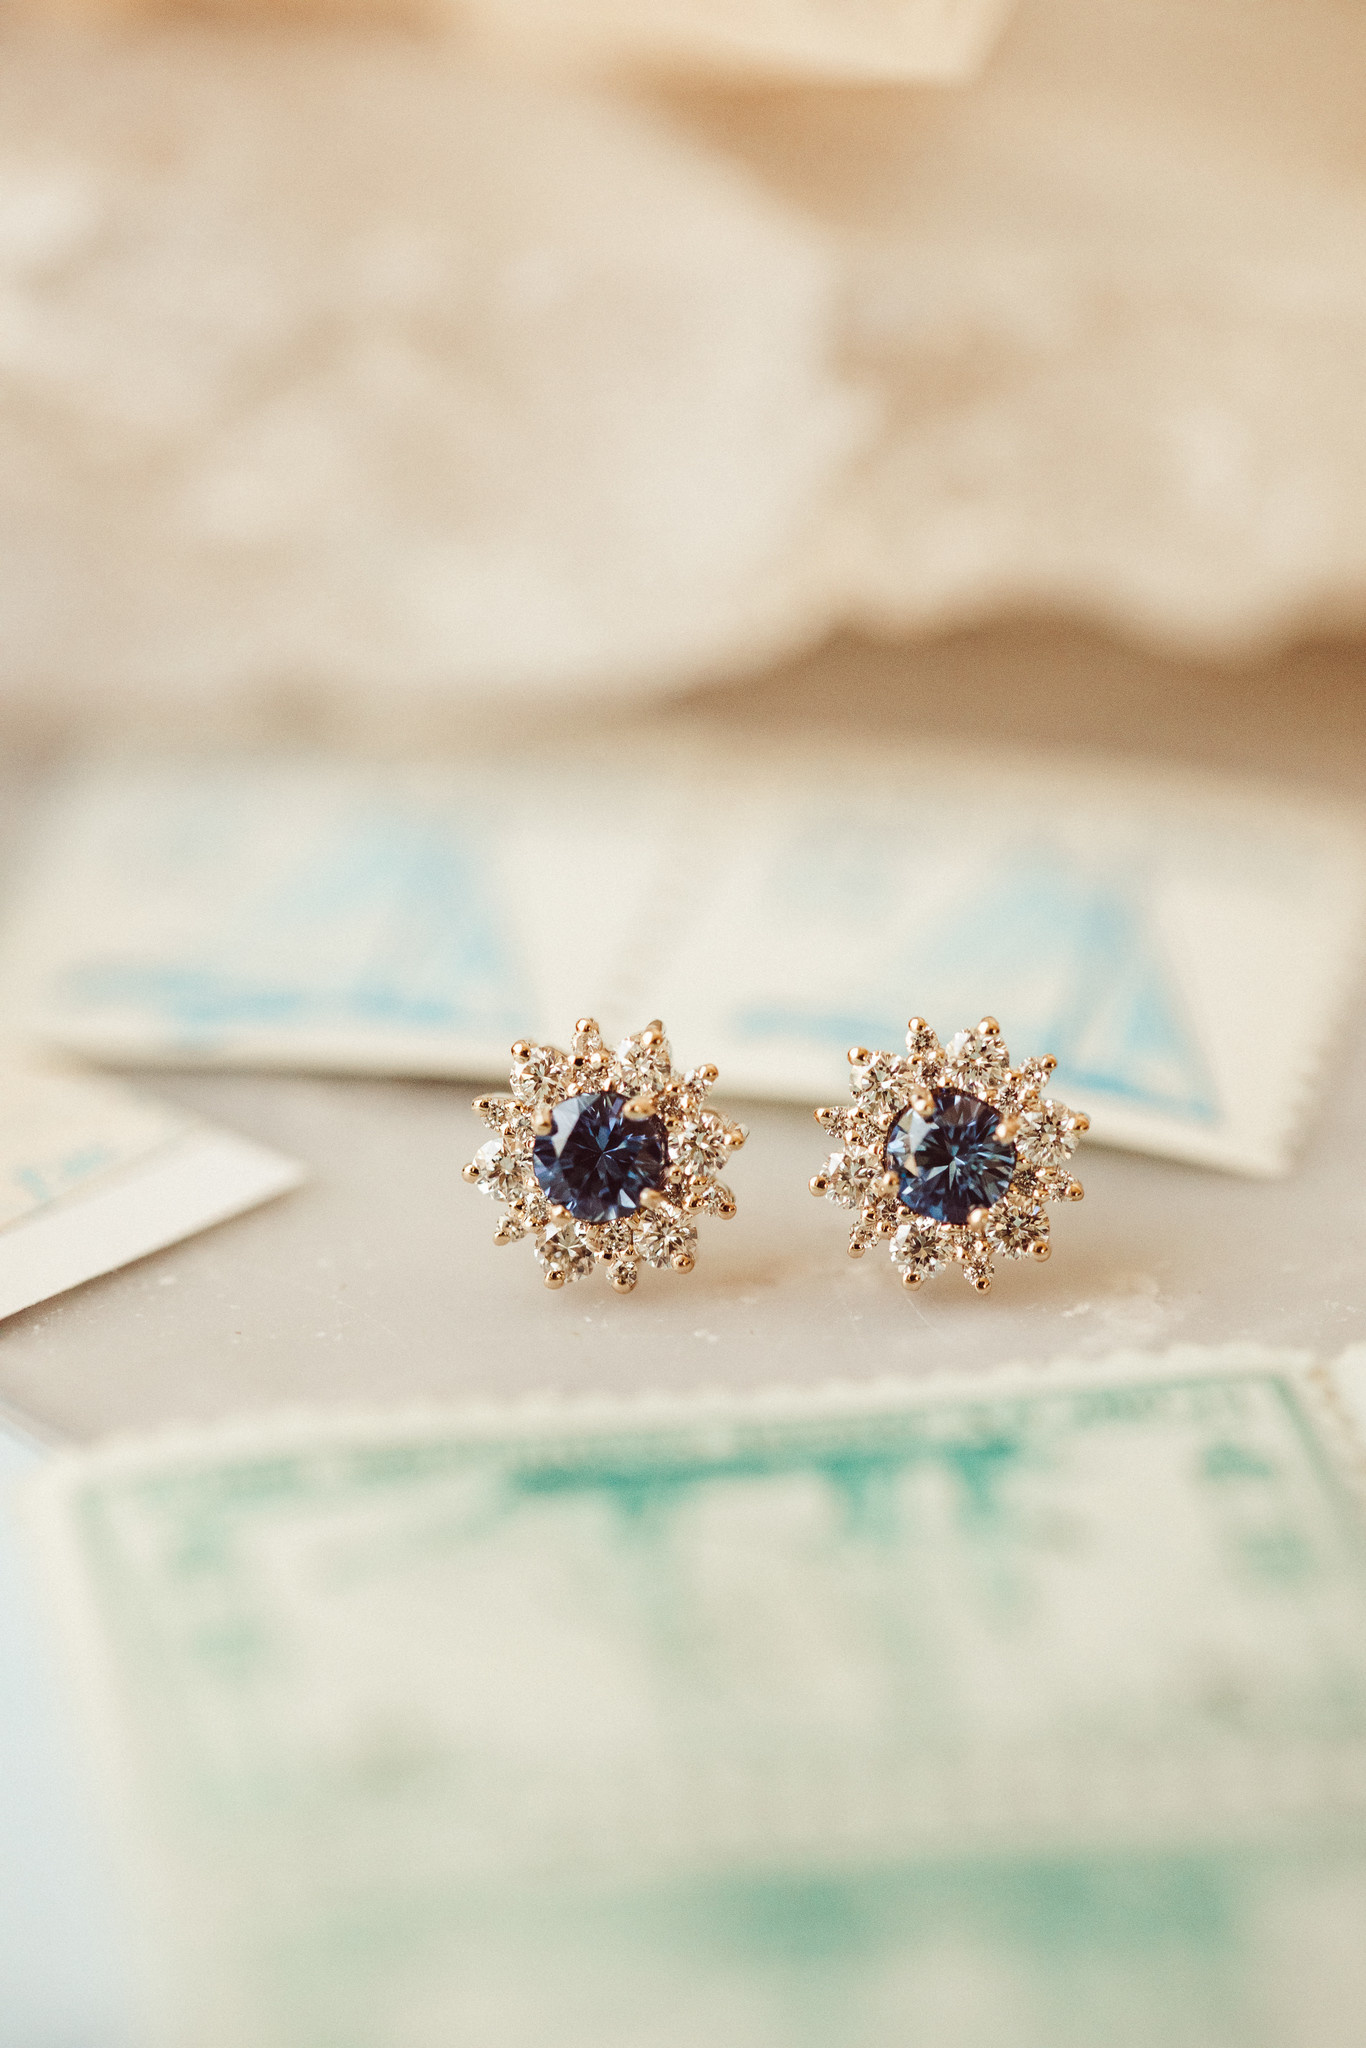 Cabochon Cut Natural Blue Sapphire Stud Earrings, 5mm, 14k Y